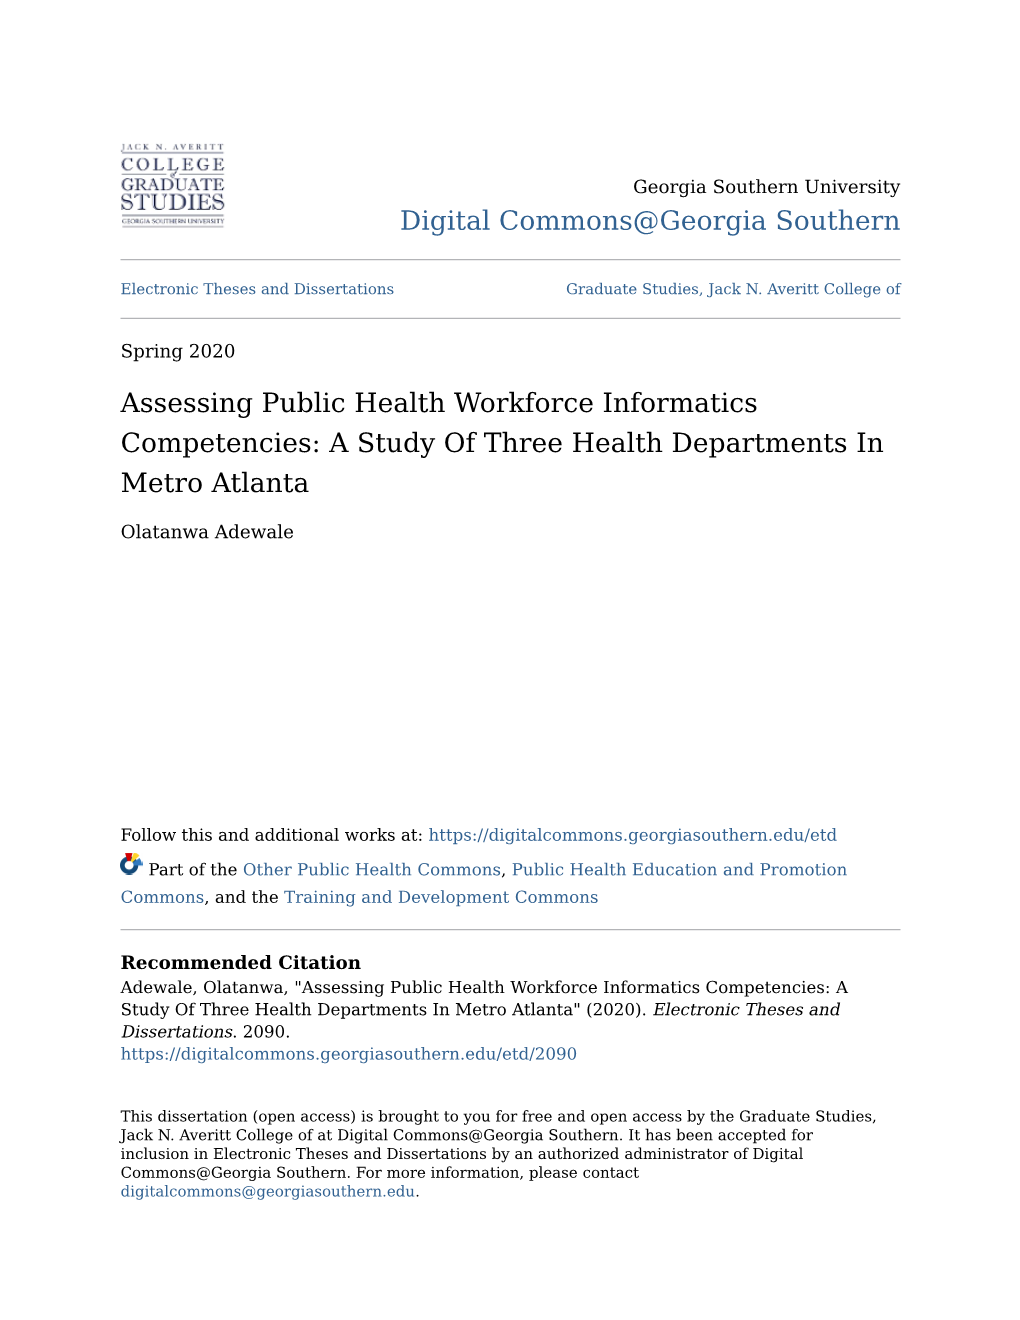 Assessing Public Health Workforce Informatics Competencies: a Study of Three Health Departments in Metro Atlanta